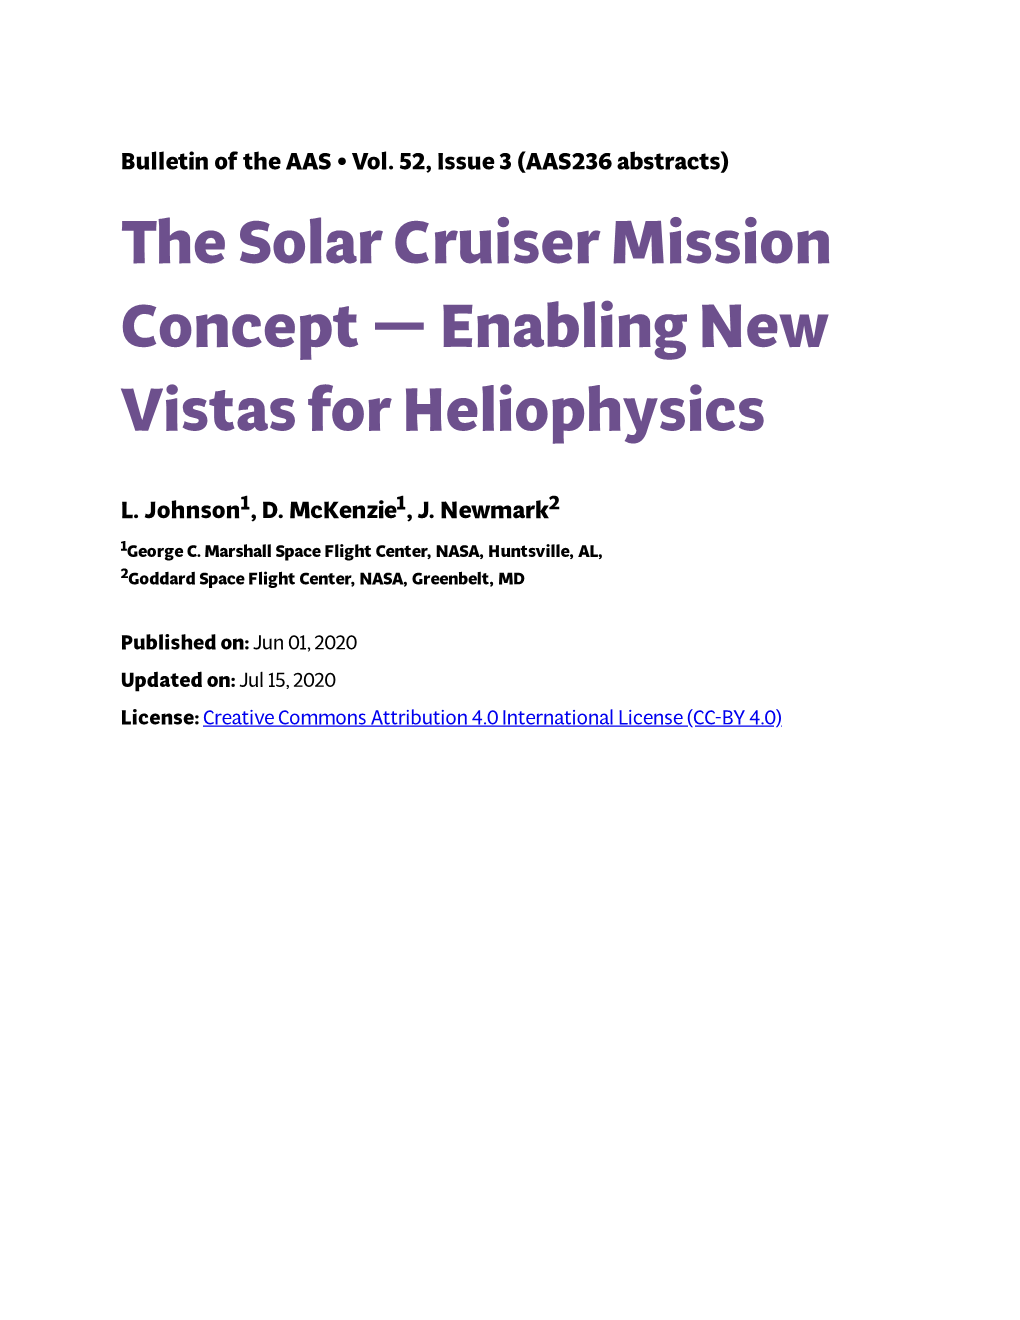 The Solar Cruiser Mission Concept Enabling New Vistas for Heliophysics